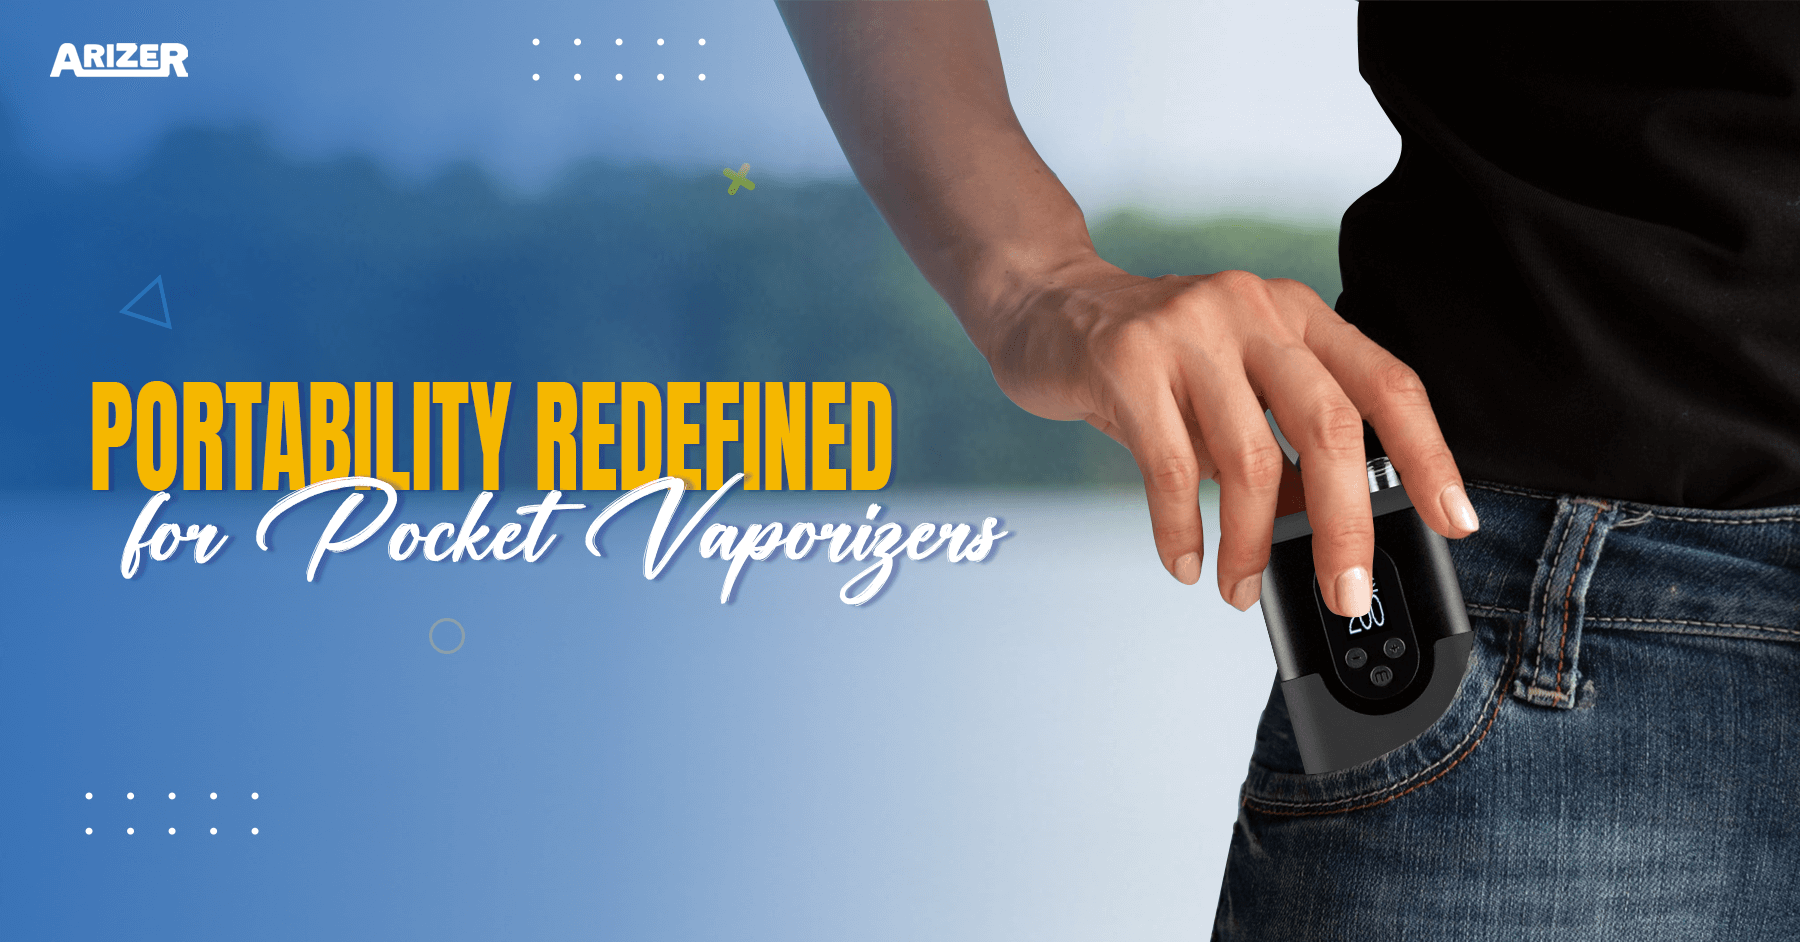 Arizer-ArGo-Portability-Redefined-for-Pocket-Vaporizers